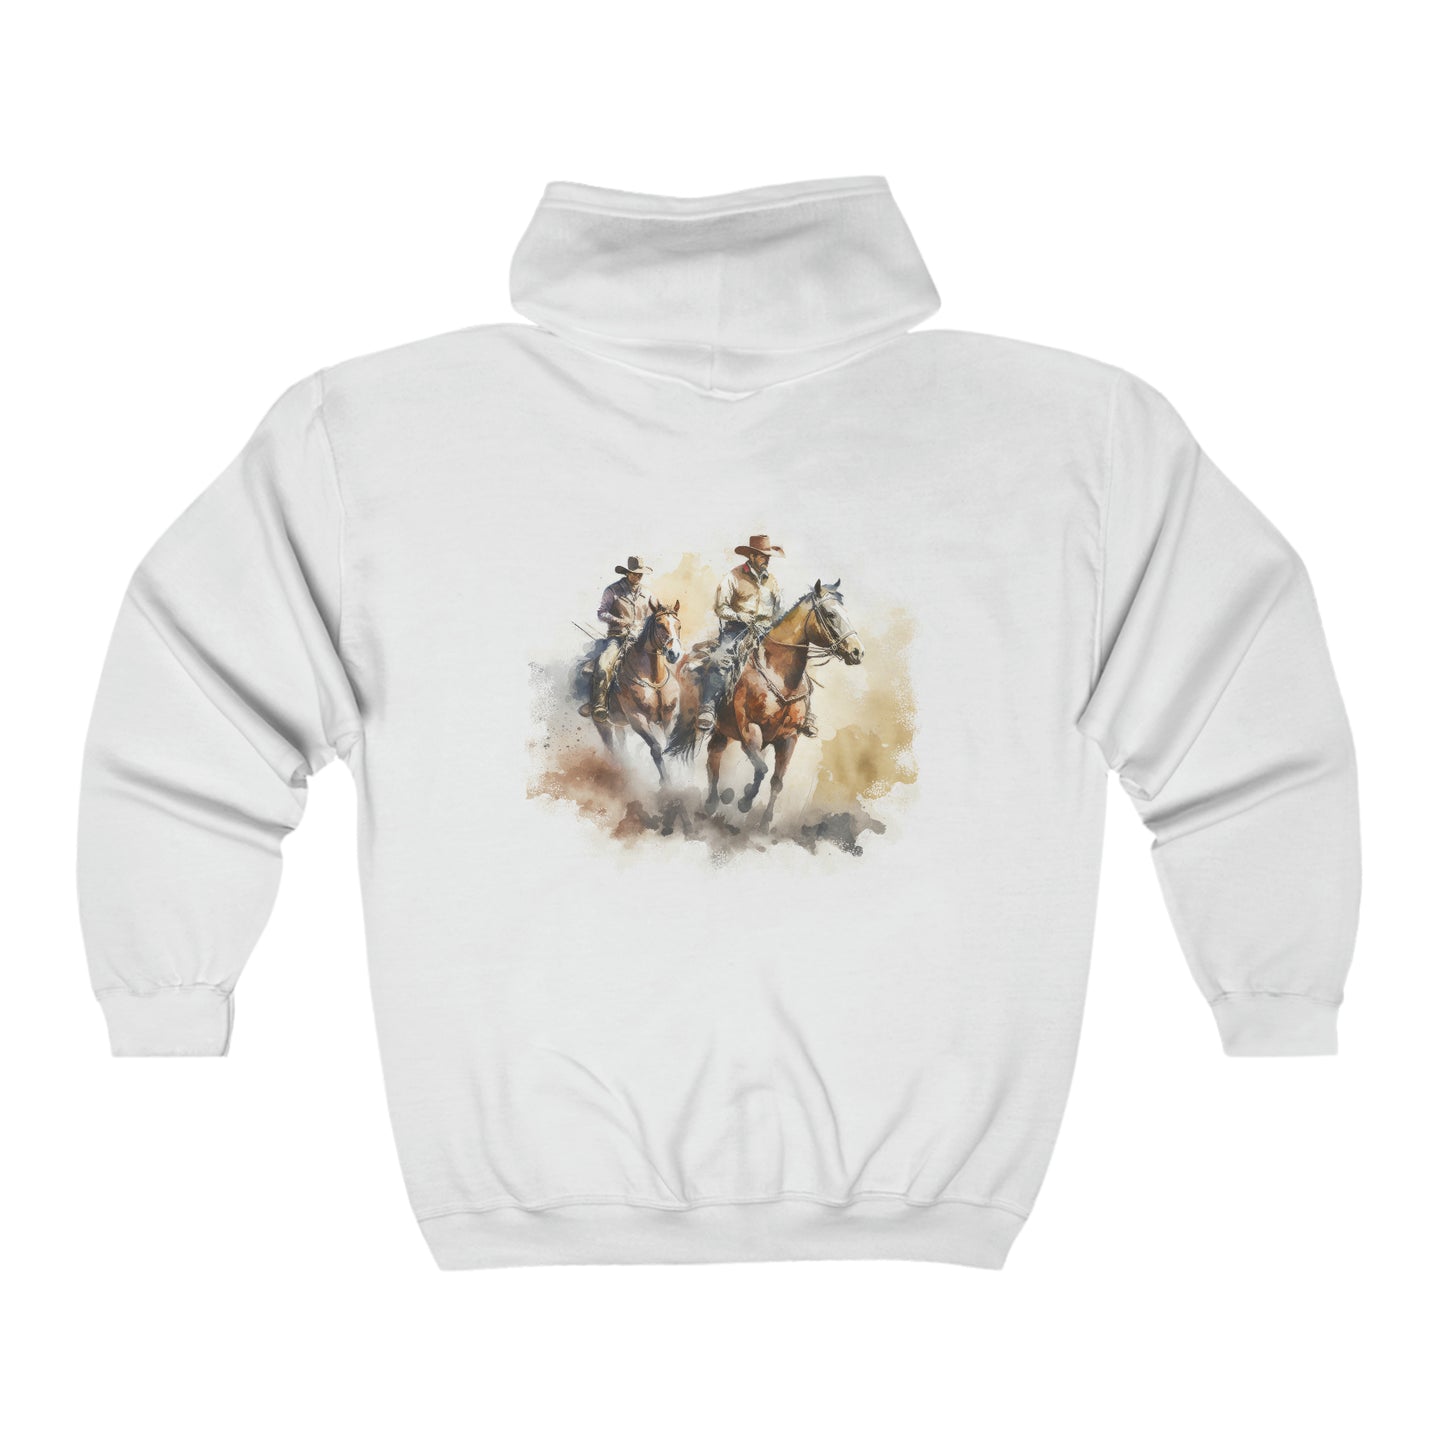 Personalized Horse Hoodie, Full Zip Western Jacket, Horse Lover Gift